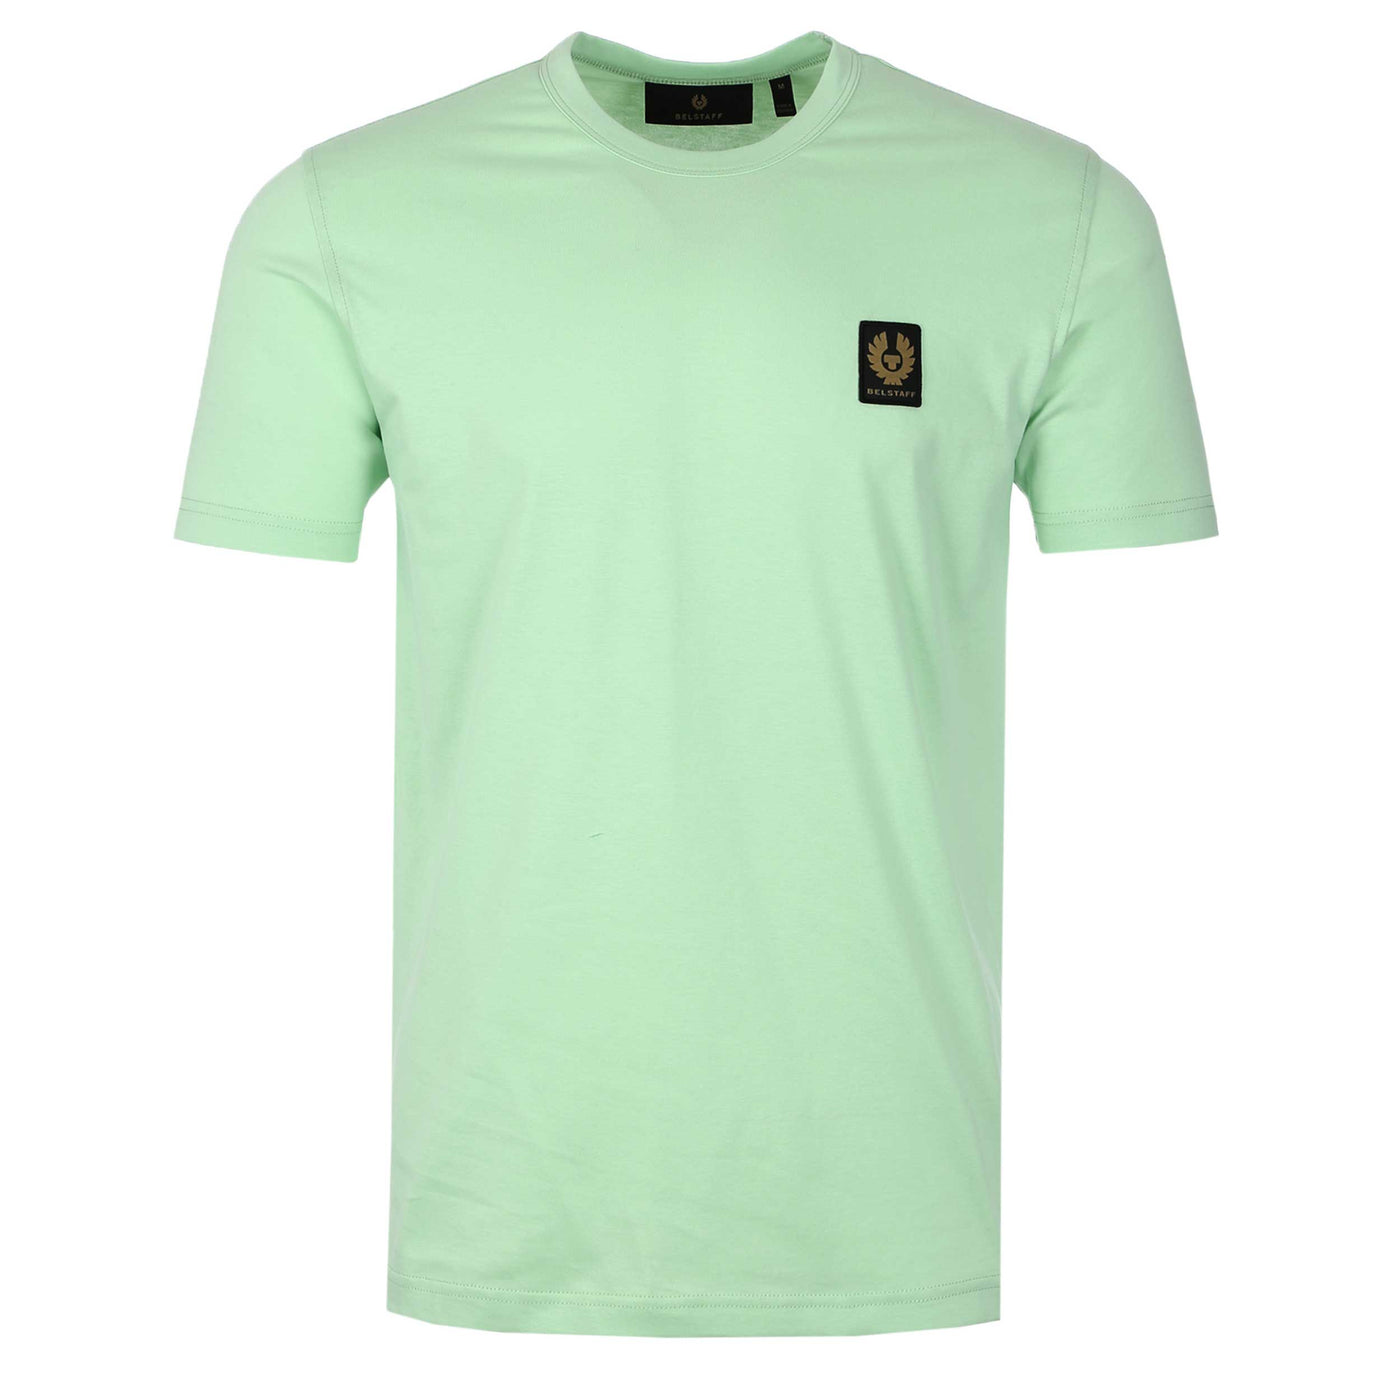 Belstaff Classic T-Shirt in New Leaf Green